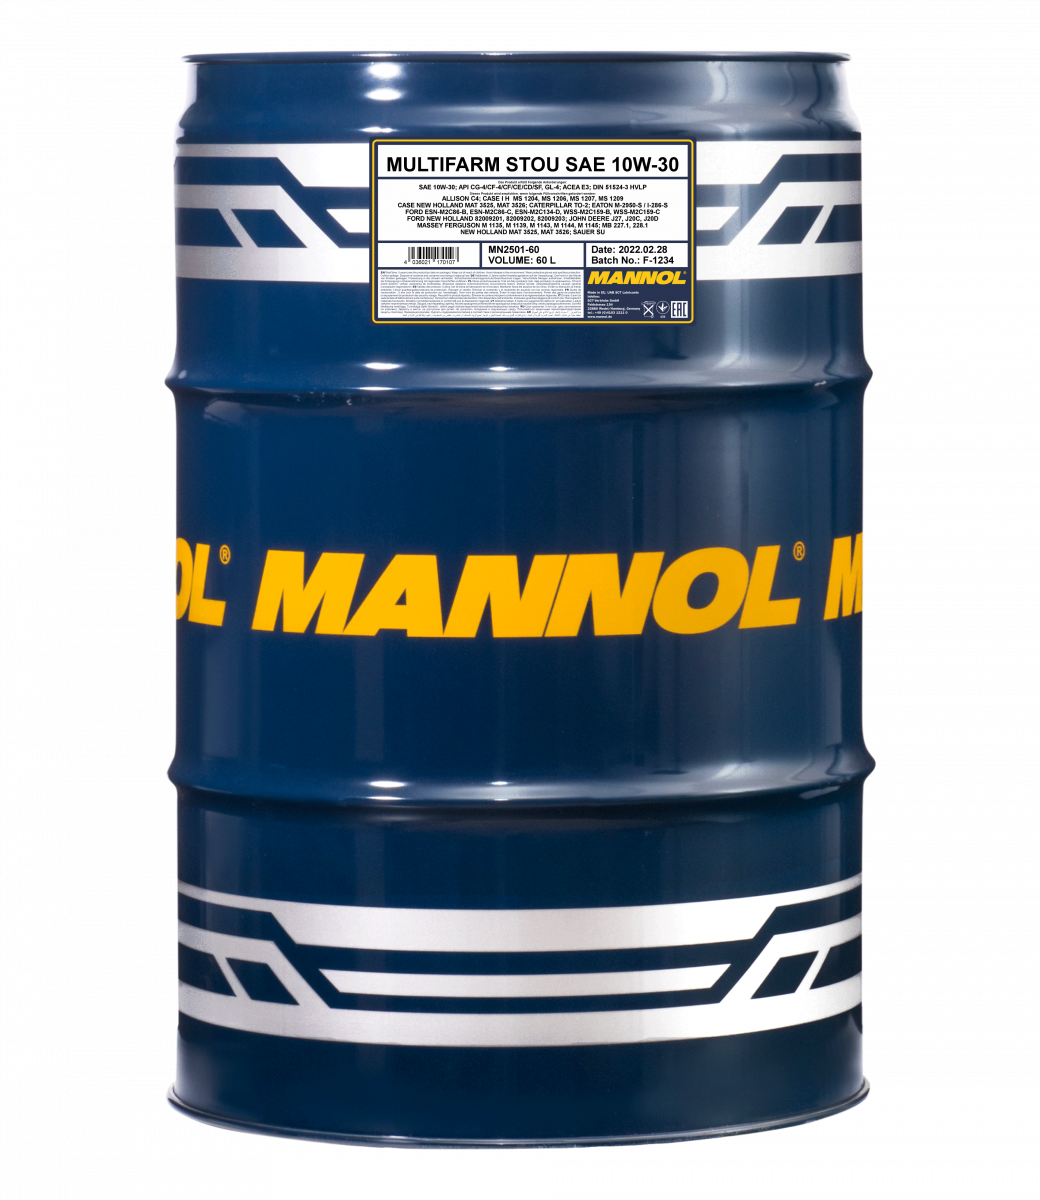 10W-30 Mannol 2501 Multifarm STOU 60 Liter